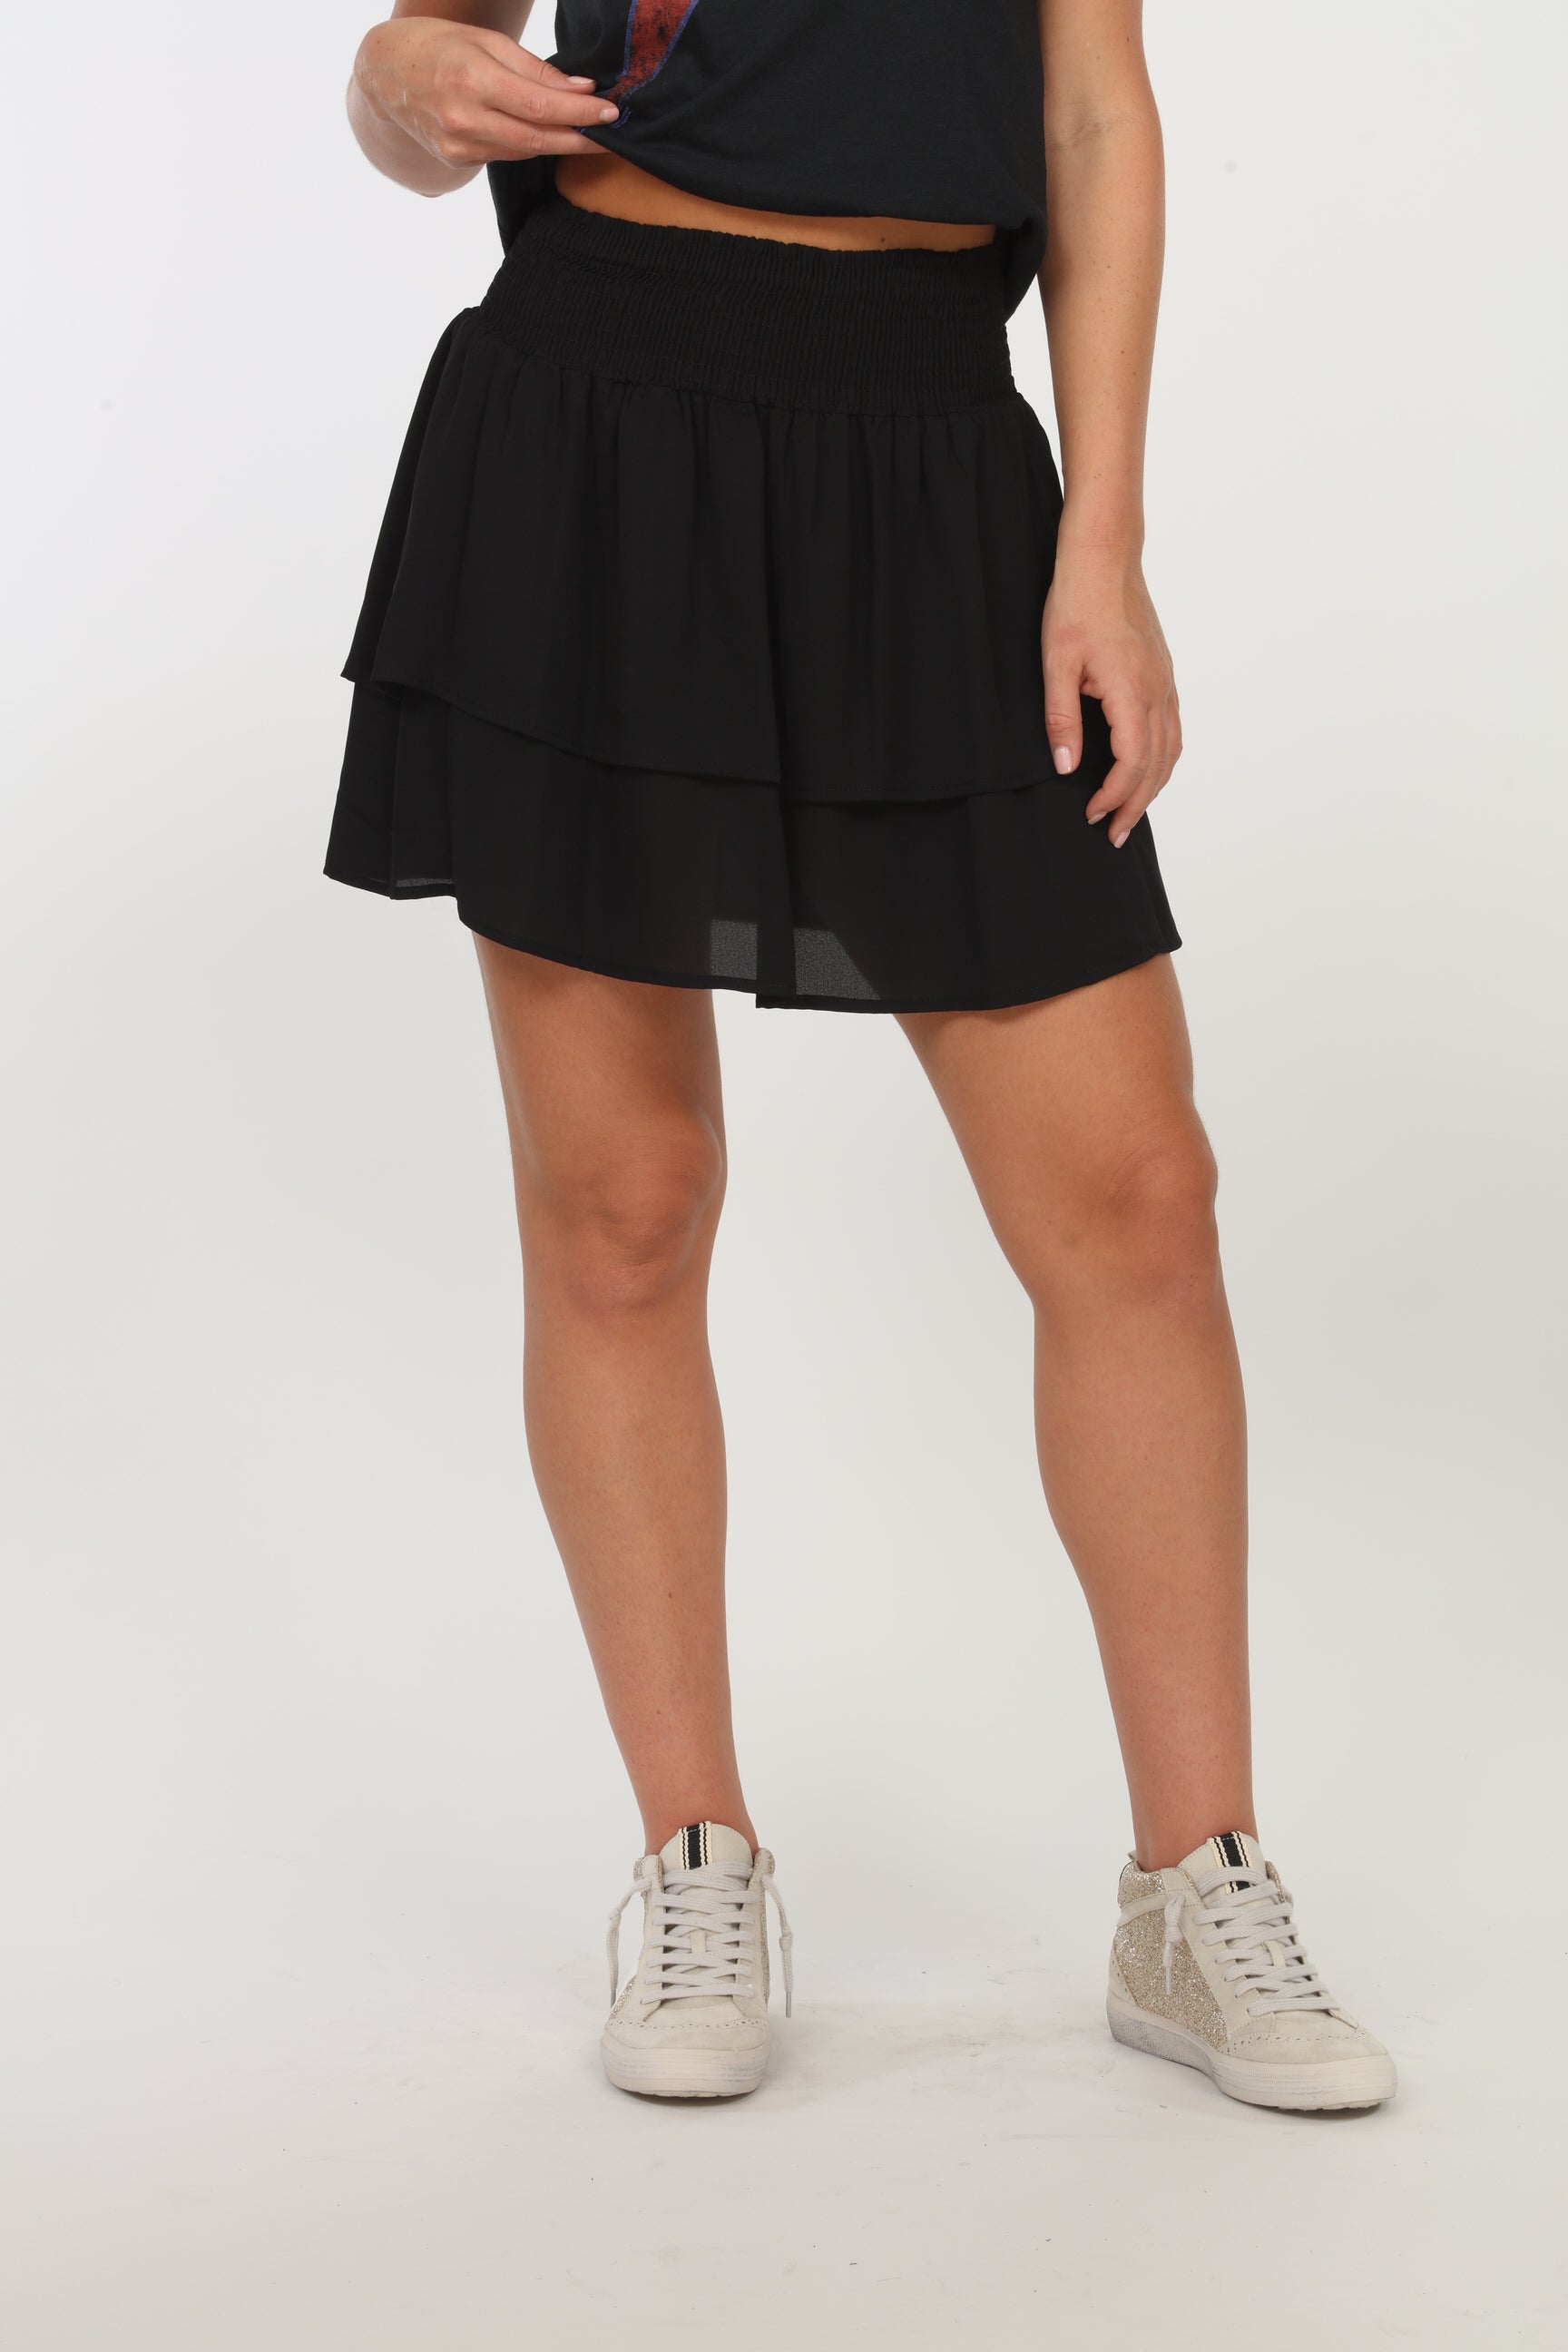 Black Woven Ruffle Smocked Skirt- SALE